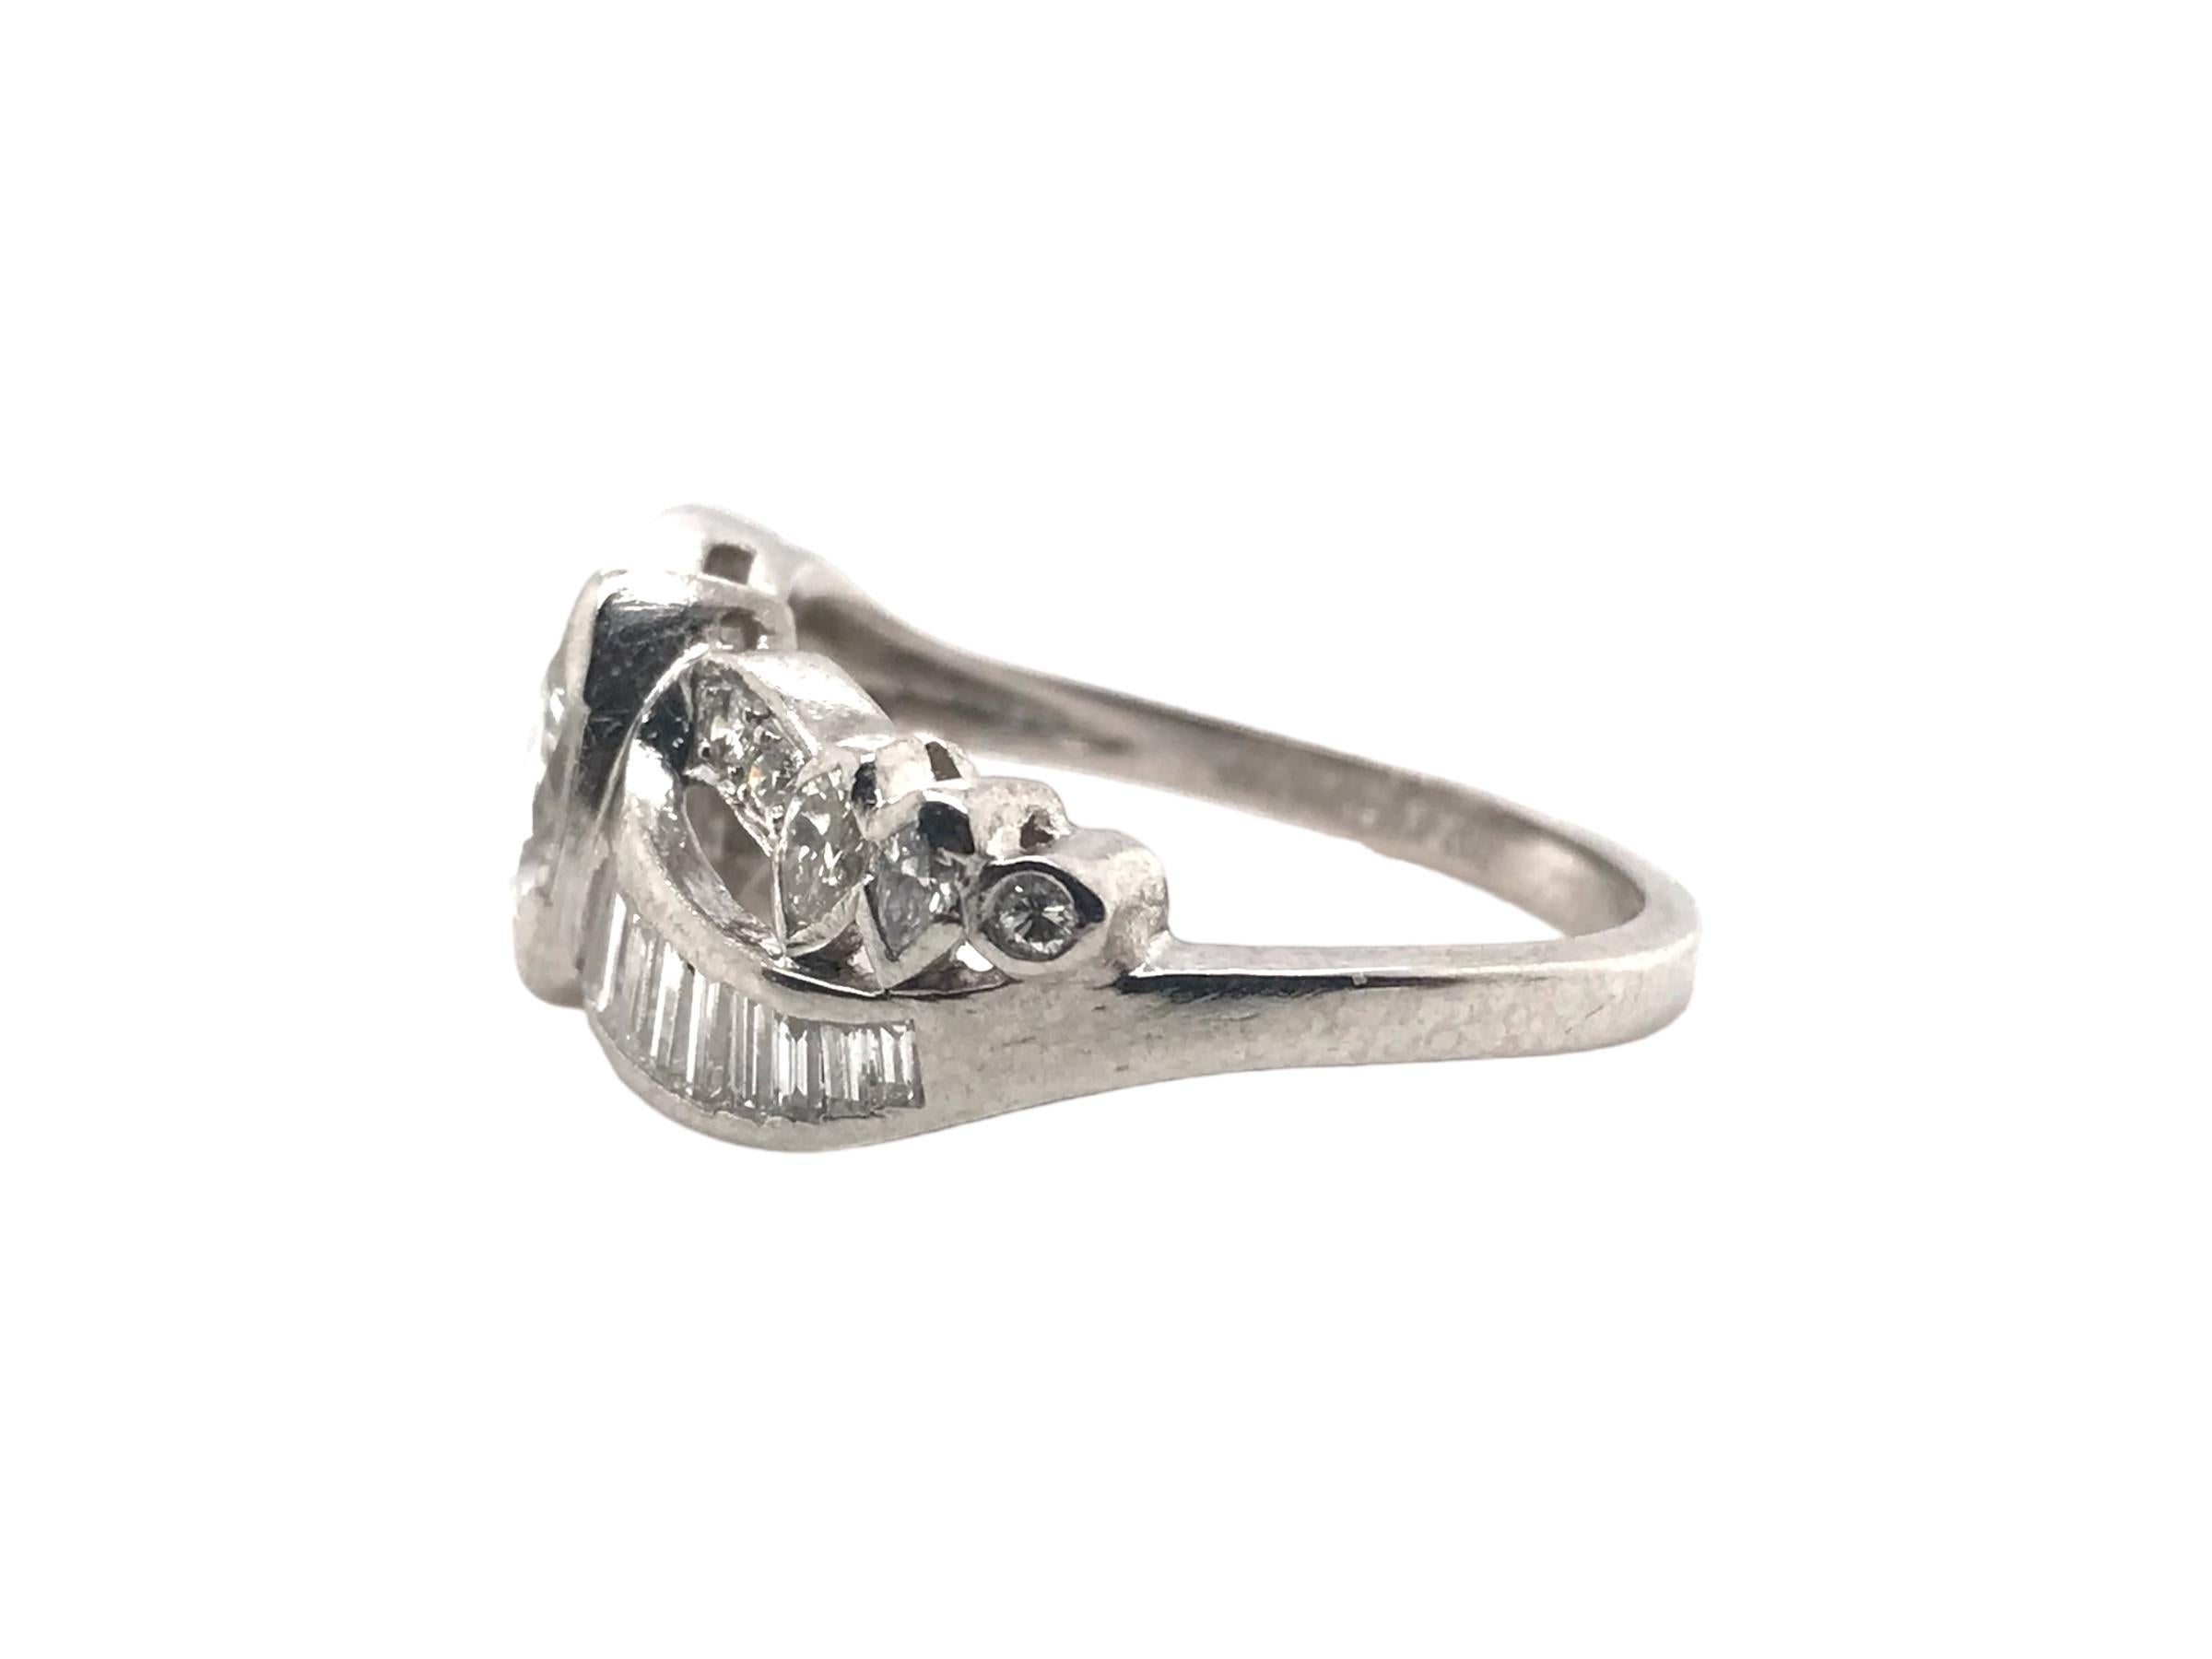 Retro Era Platinum Diamond Band Style Ring In Good Condition For Sale In Montgomery, AL